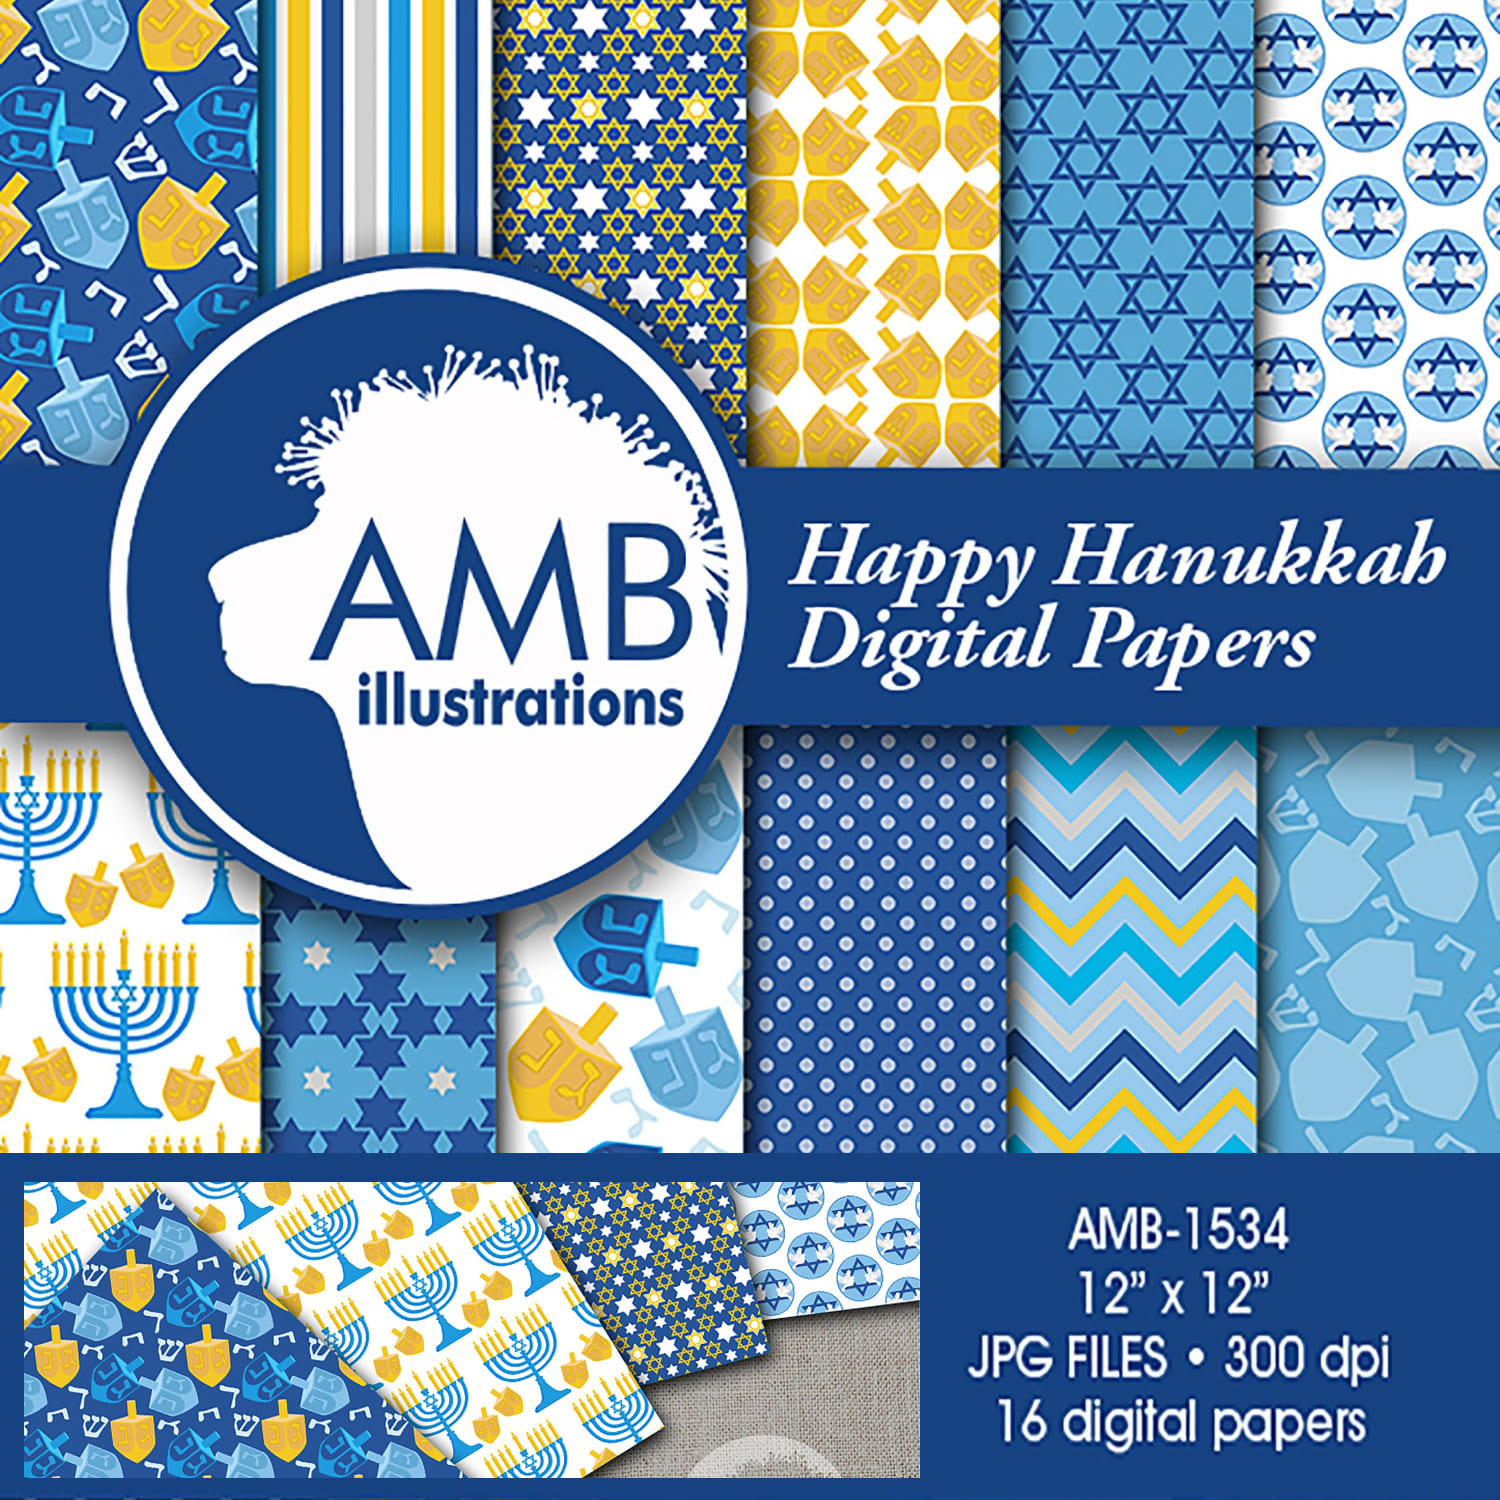 Prints of happy hanukkah patterns.